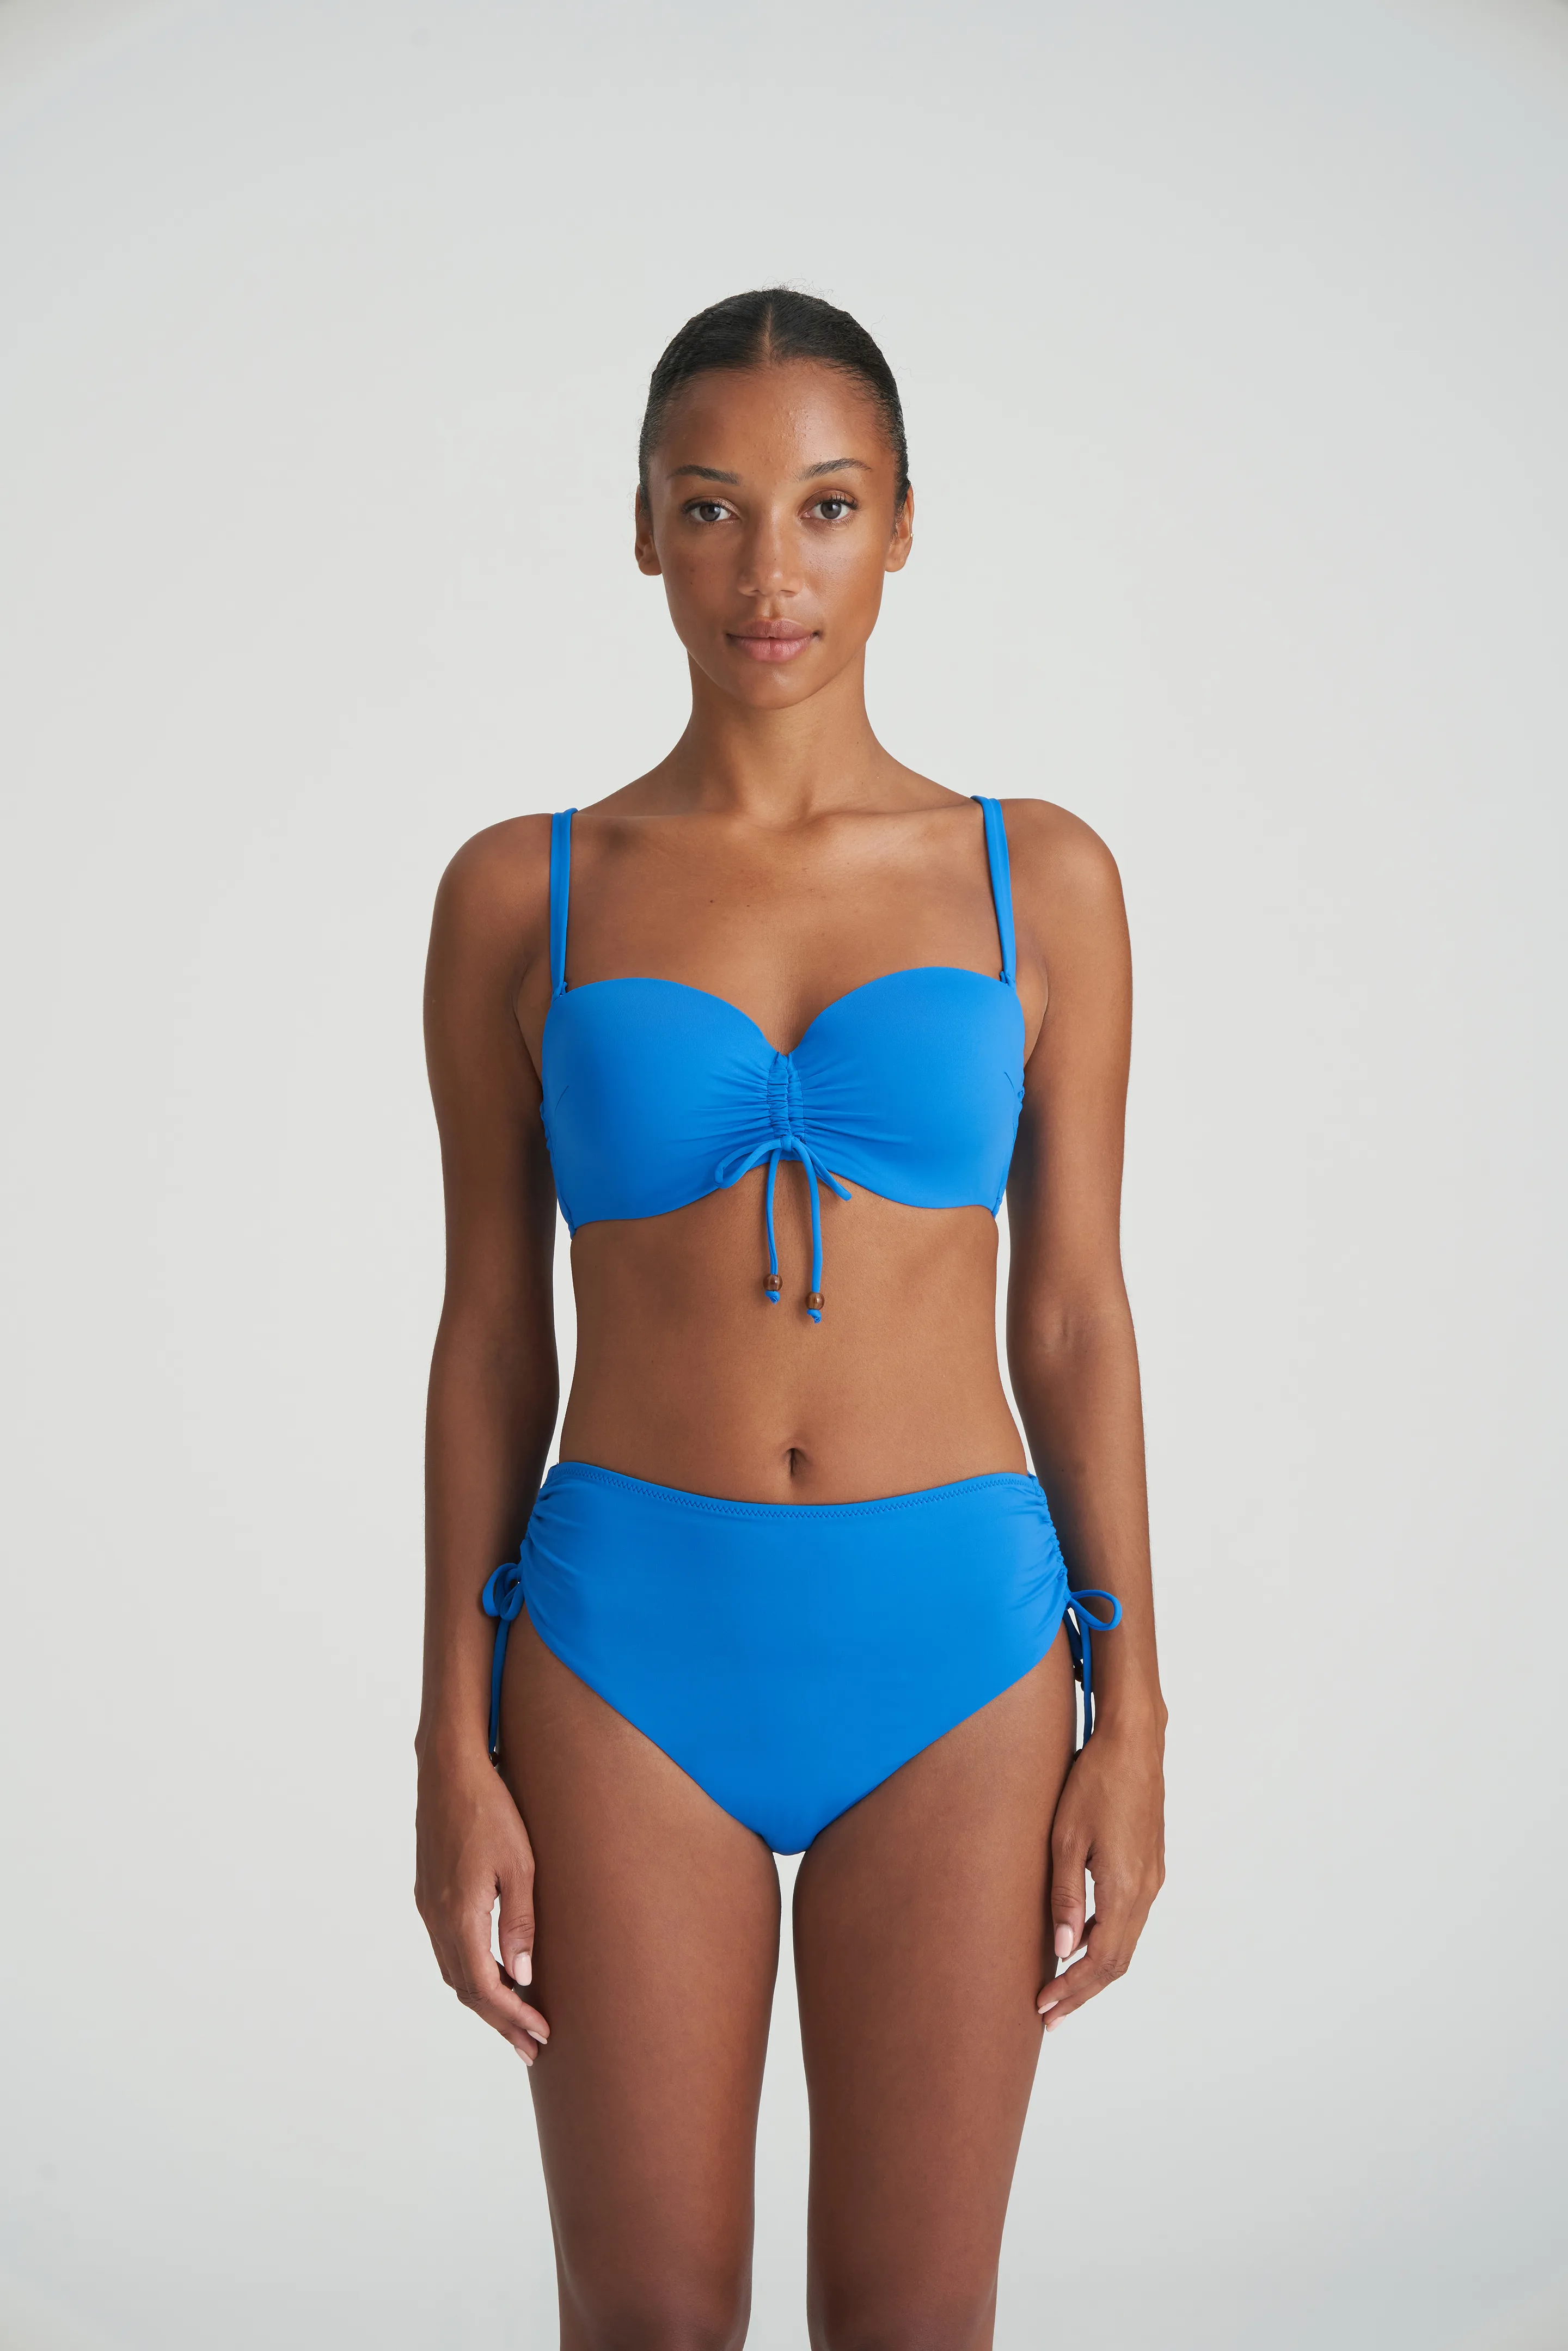 Marie Jo Swim SAN DOMINO Evening Blue padded triangle bikini top